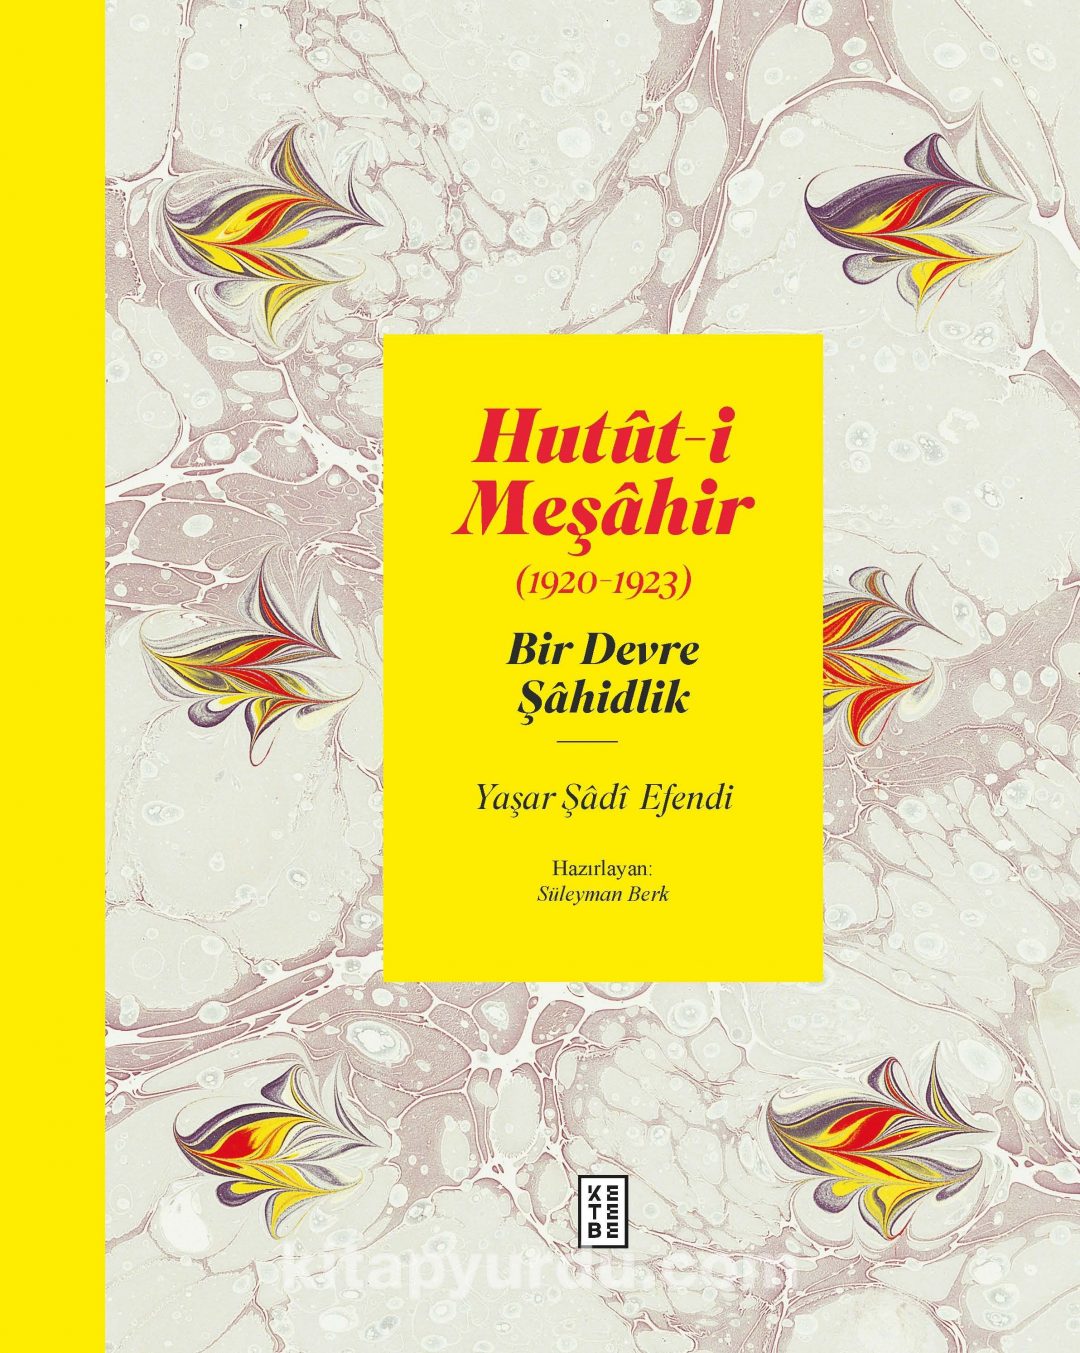 Hutut-i Meşahir & Bir Devre Şahidlik (1920-1922